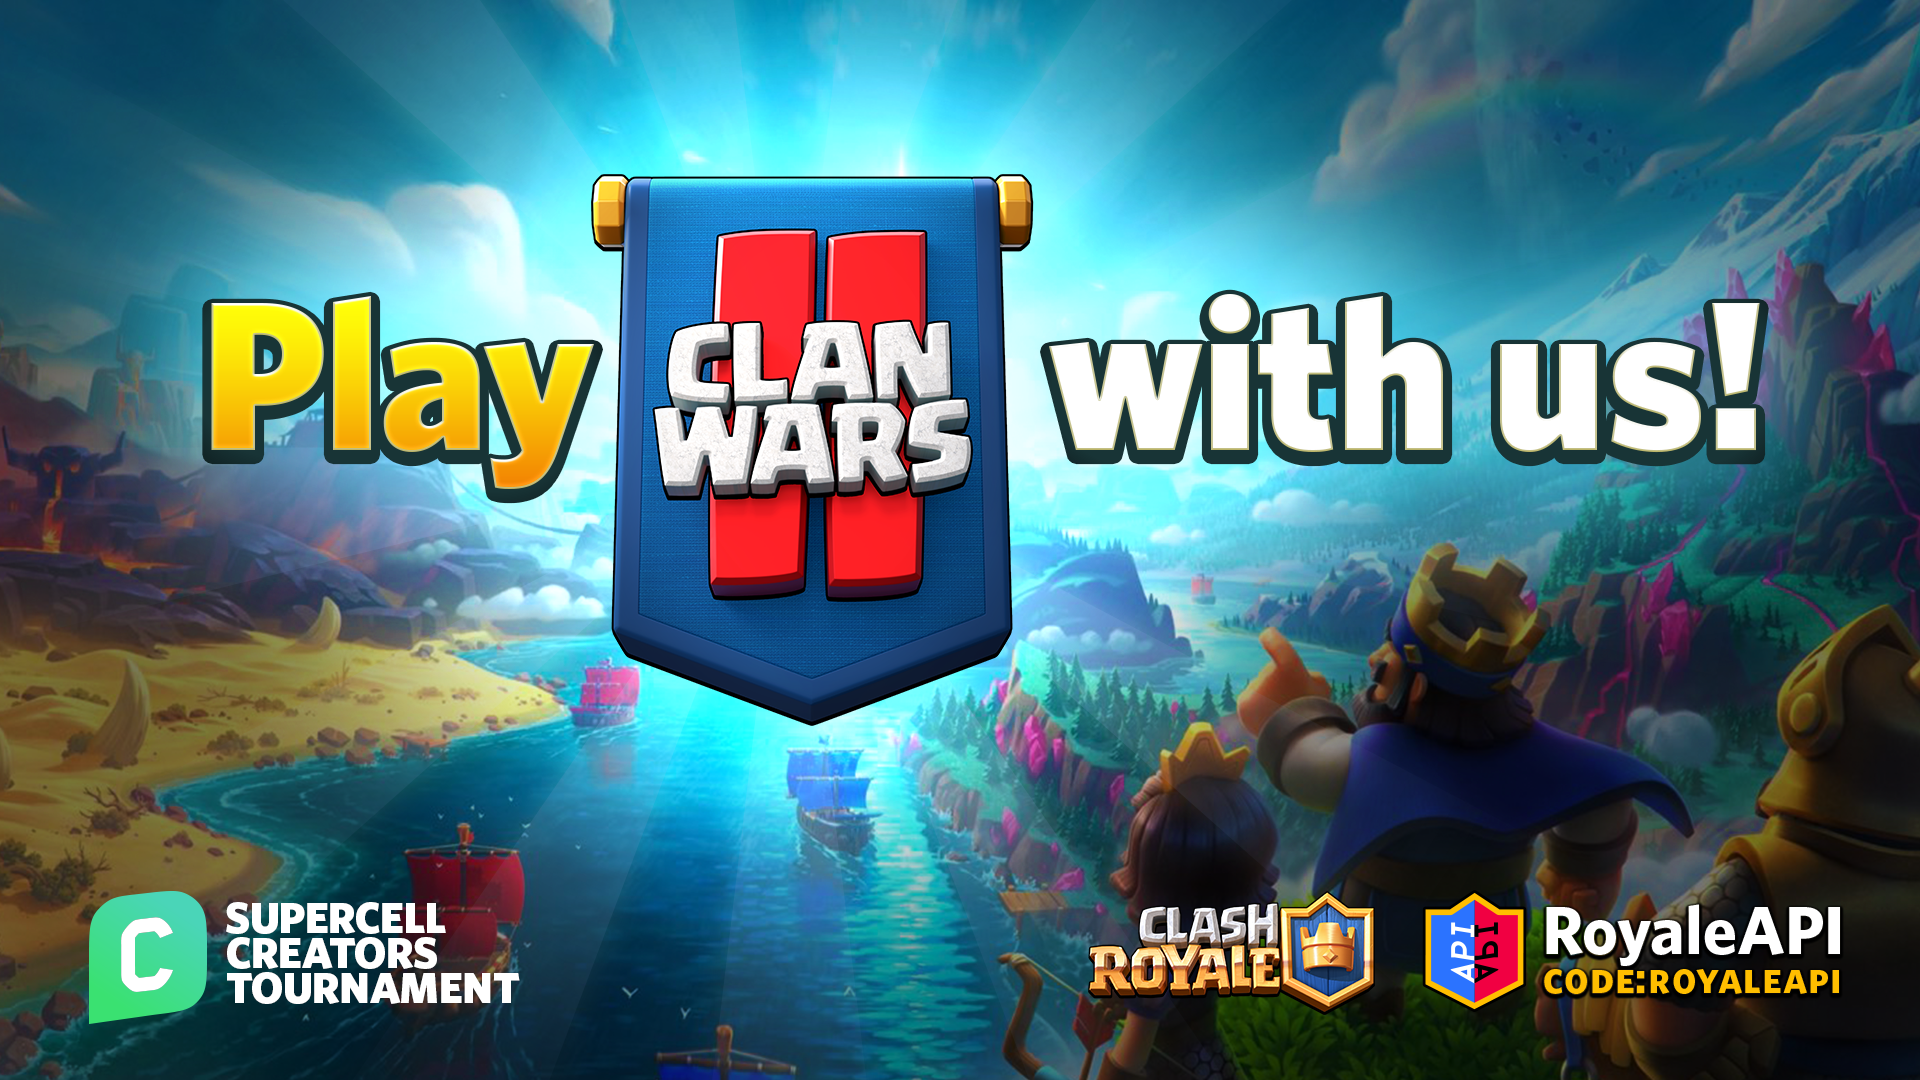 Supercell Creators Clan Wars 2 Tournament Blog Royaleapi